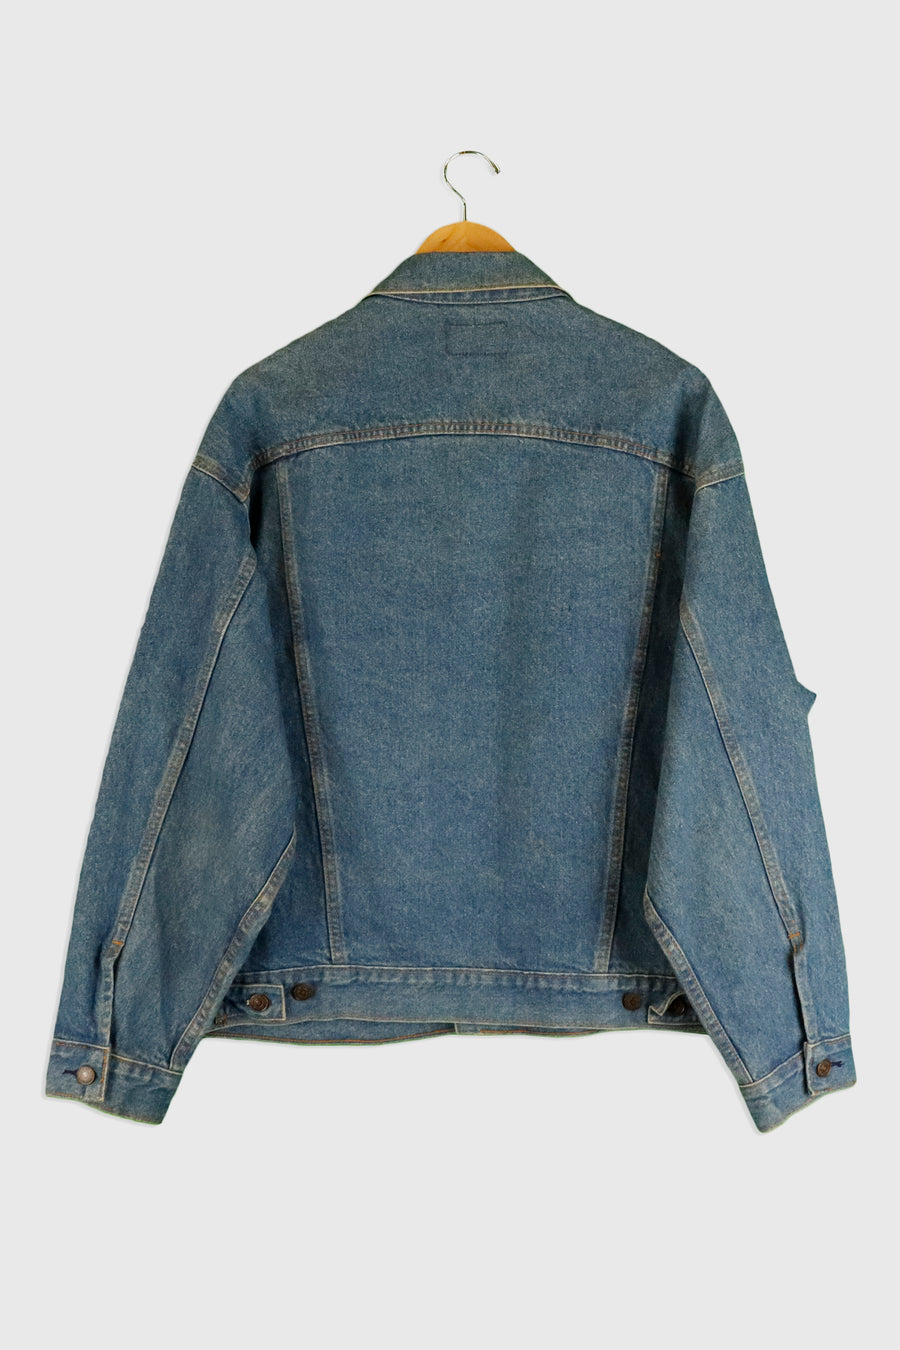 Vintage Levi Strauss & Co. Denim Jacket Sz L